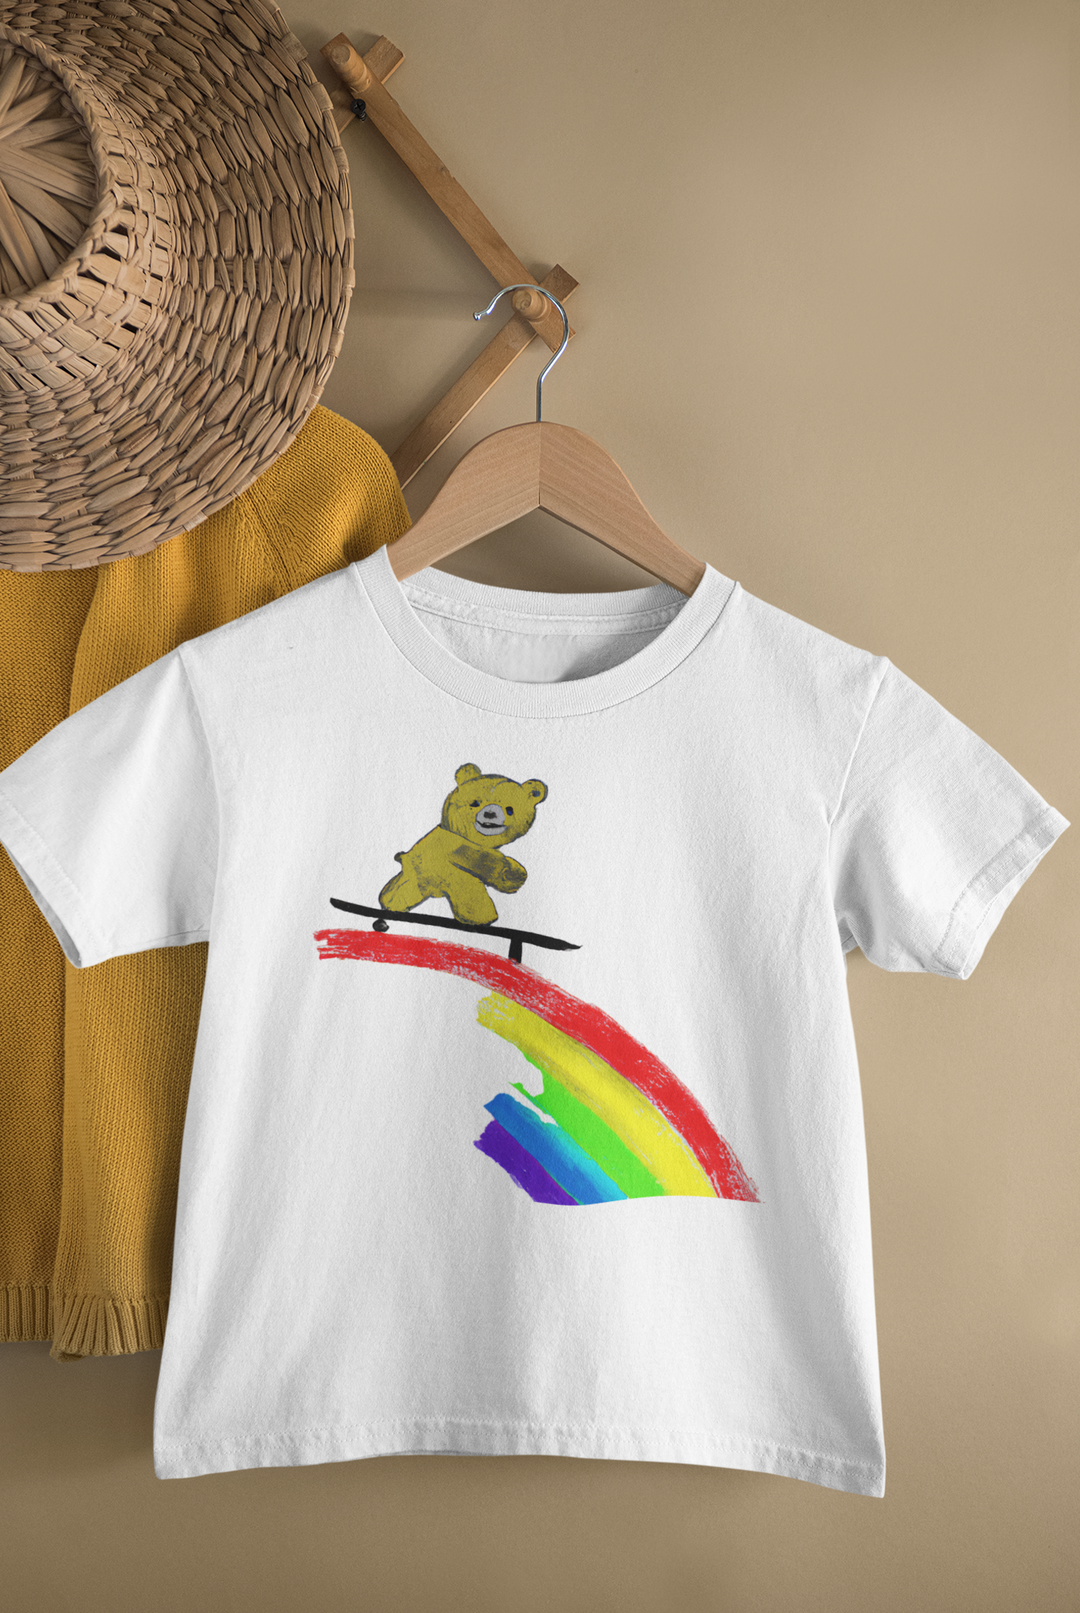 Teddy Riding A Rainbow. Short Sleeve T-shirt for Toddler and Kids - TeesForToddlersandKids -  t-shirt - seasons, summer, surf - a-cute-teddy-bear-riding-a-rainbow-jean-michael-basquiat-style-short-sleeve-t-shirt-for-toddler-and-kids